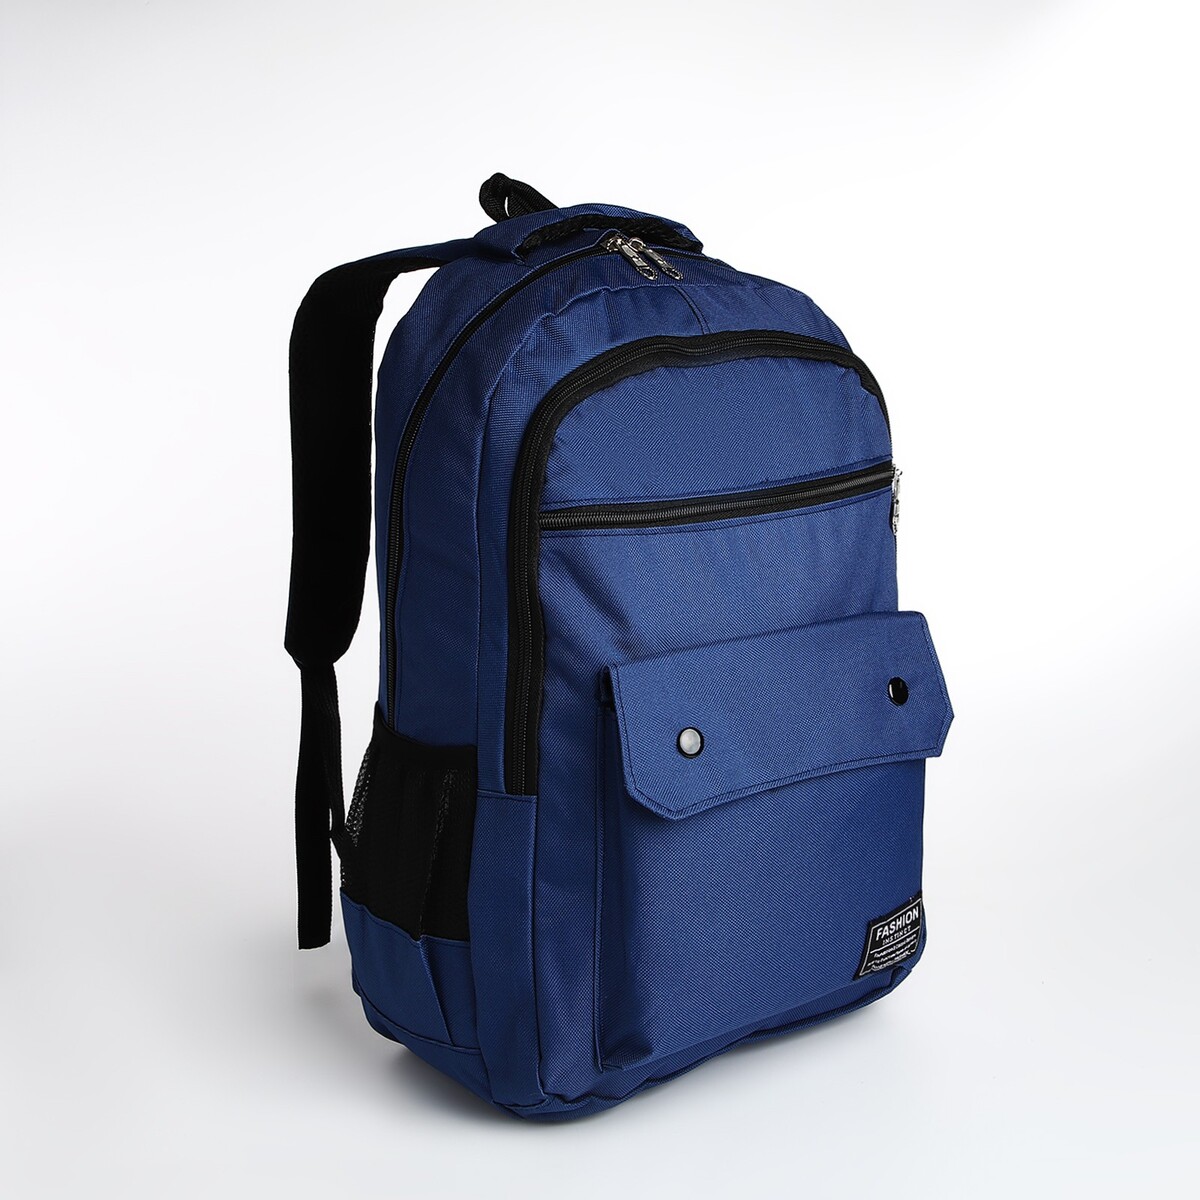 Рюкзак молодежный на молнии, 2 отдела, 4 кармана, цвет синий рюкзак молодежный из текстиля 2 отдела на молнии 3 кармана синий